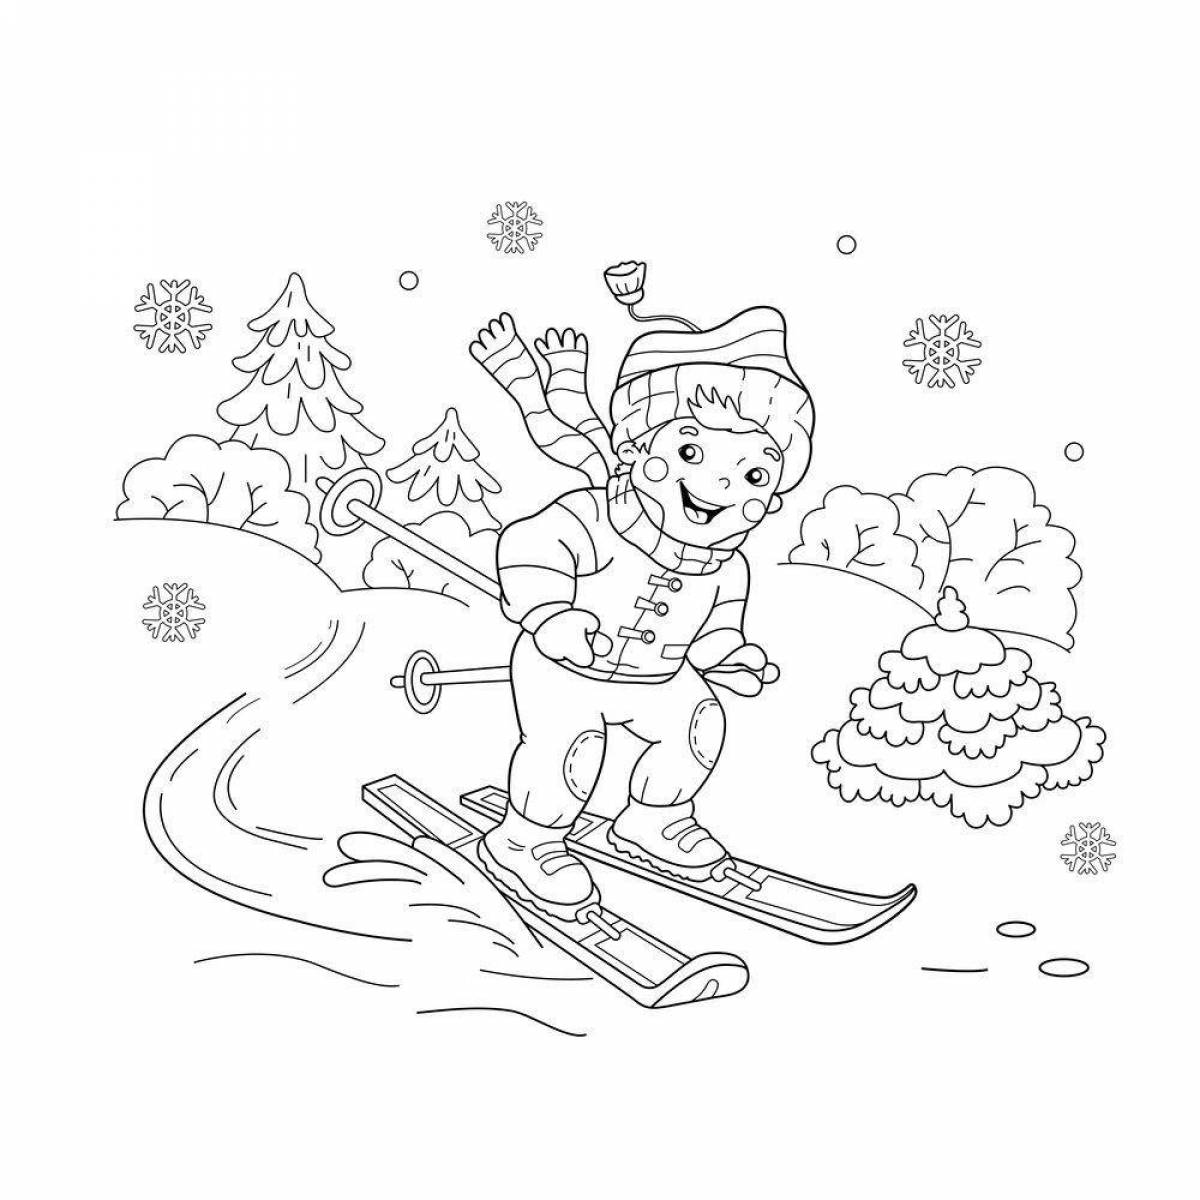 Coloring page joyful boy skiing